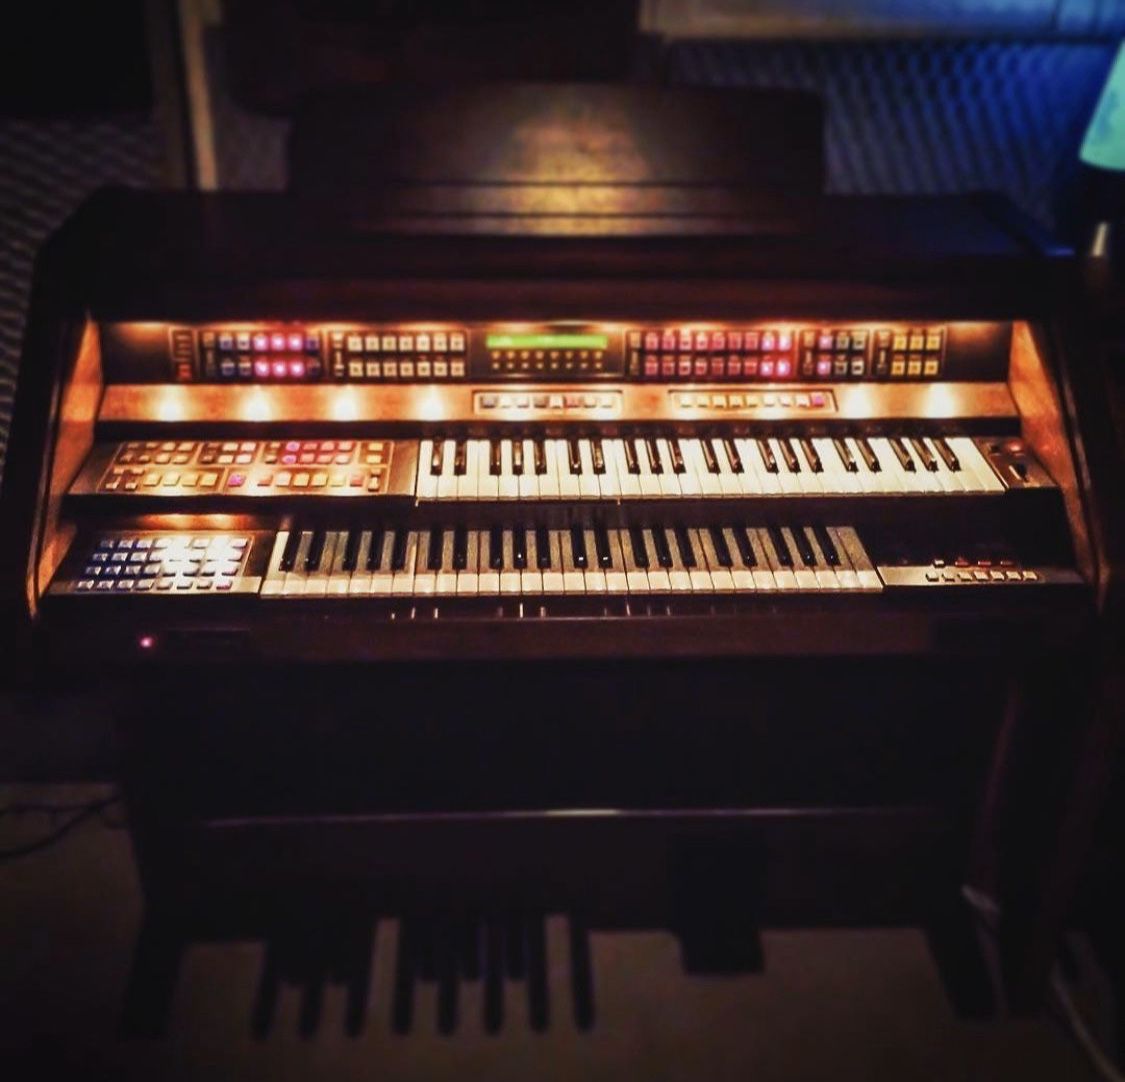 Estey Legend Organ/ Midi Controller